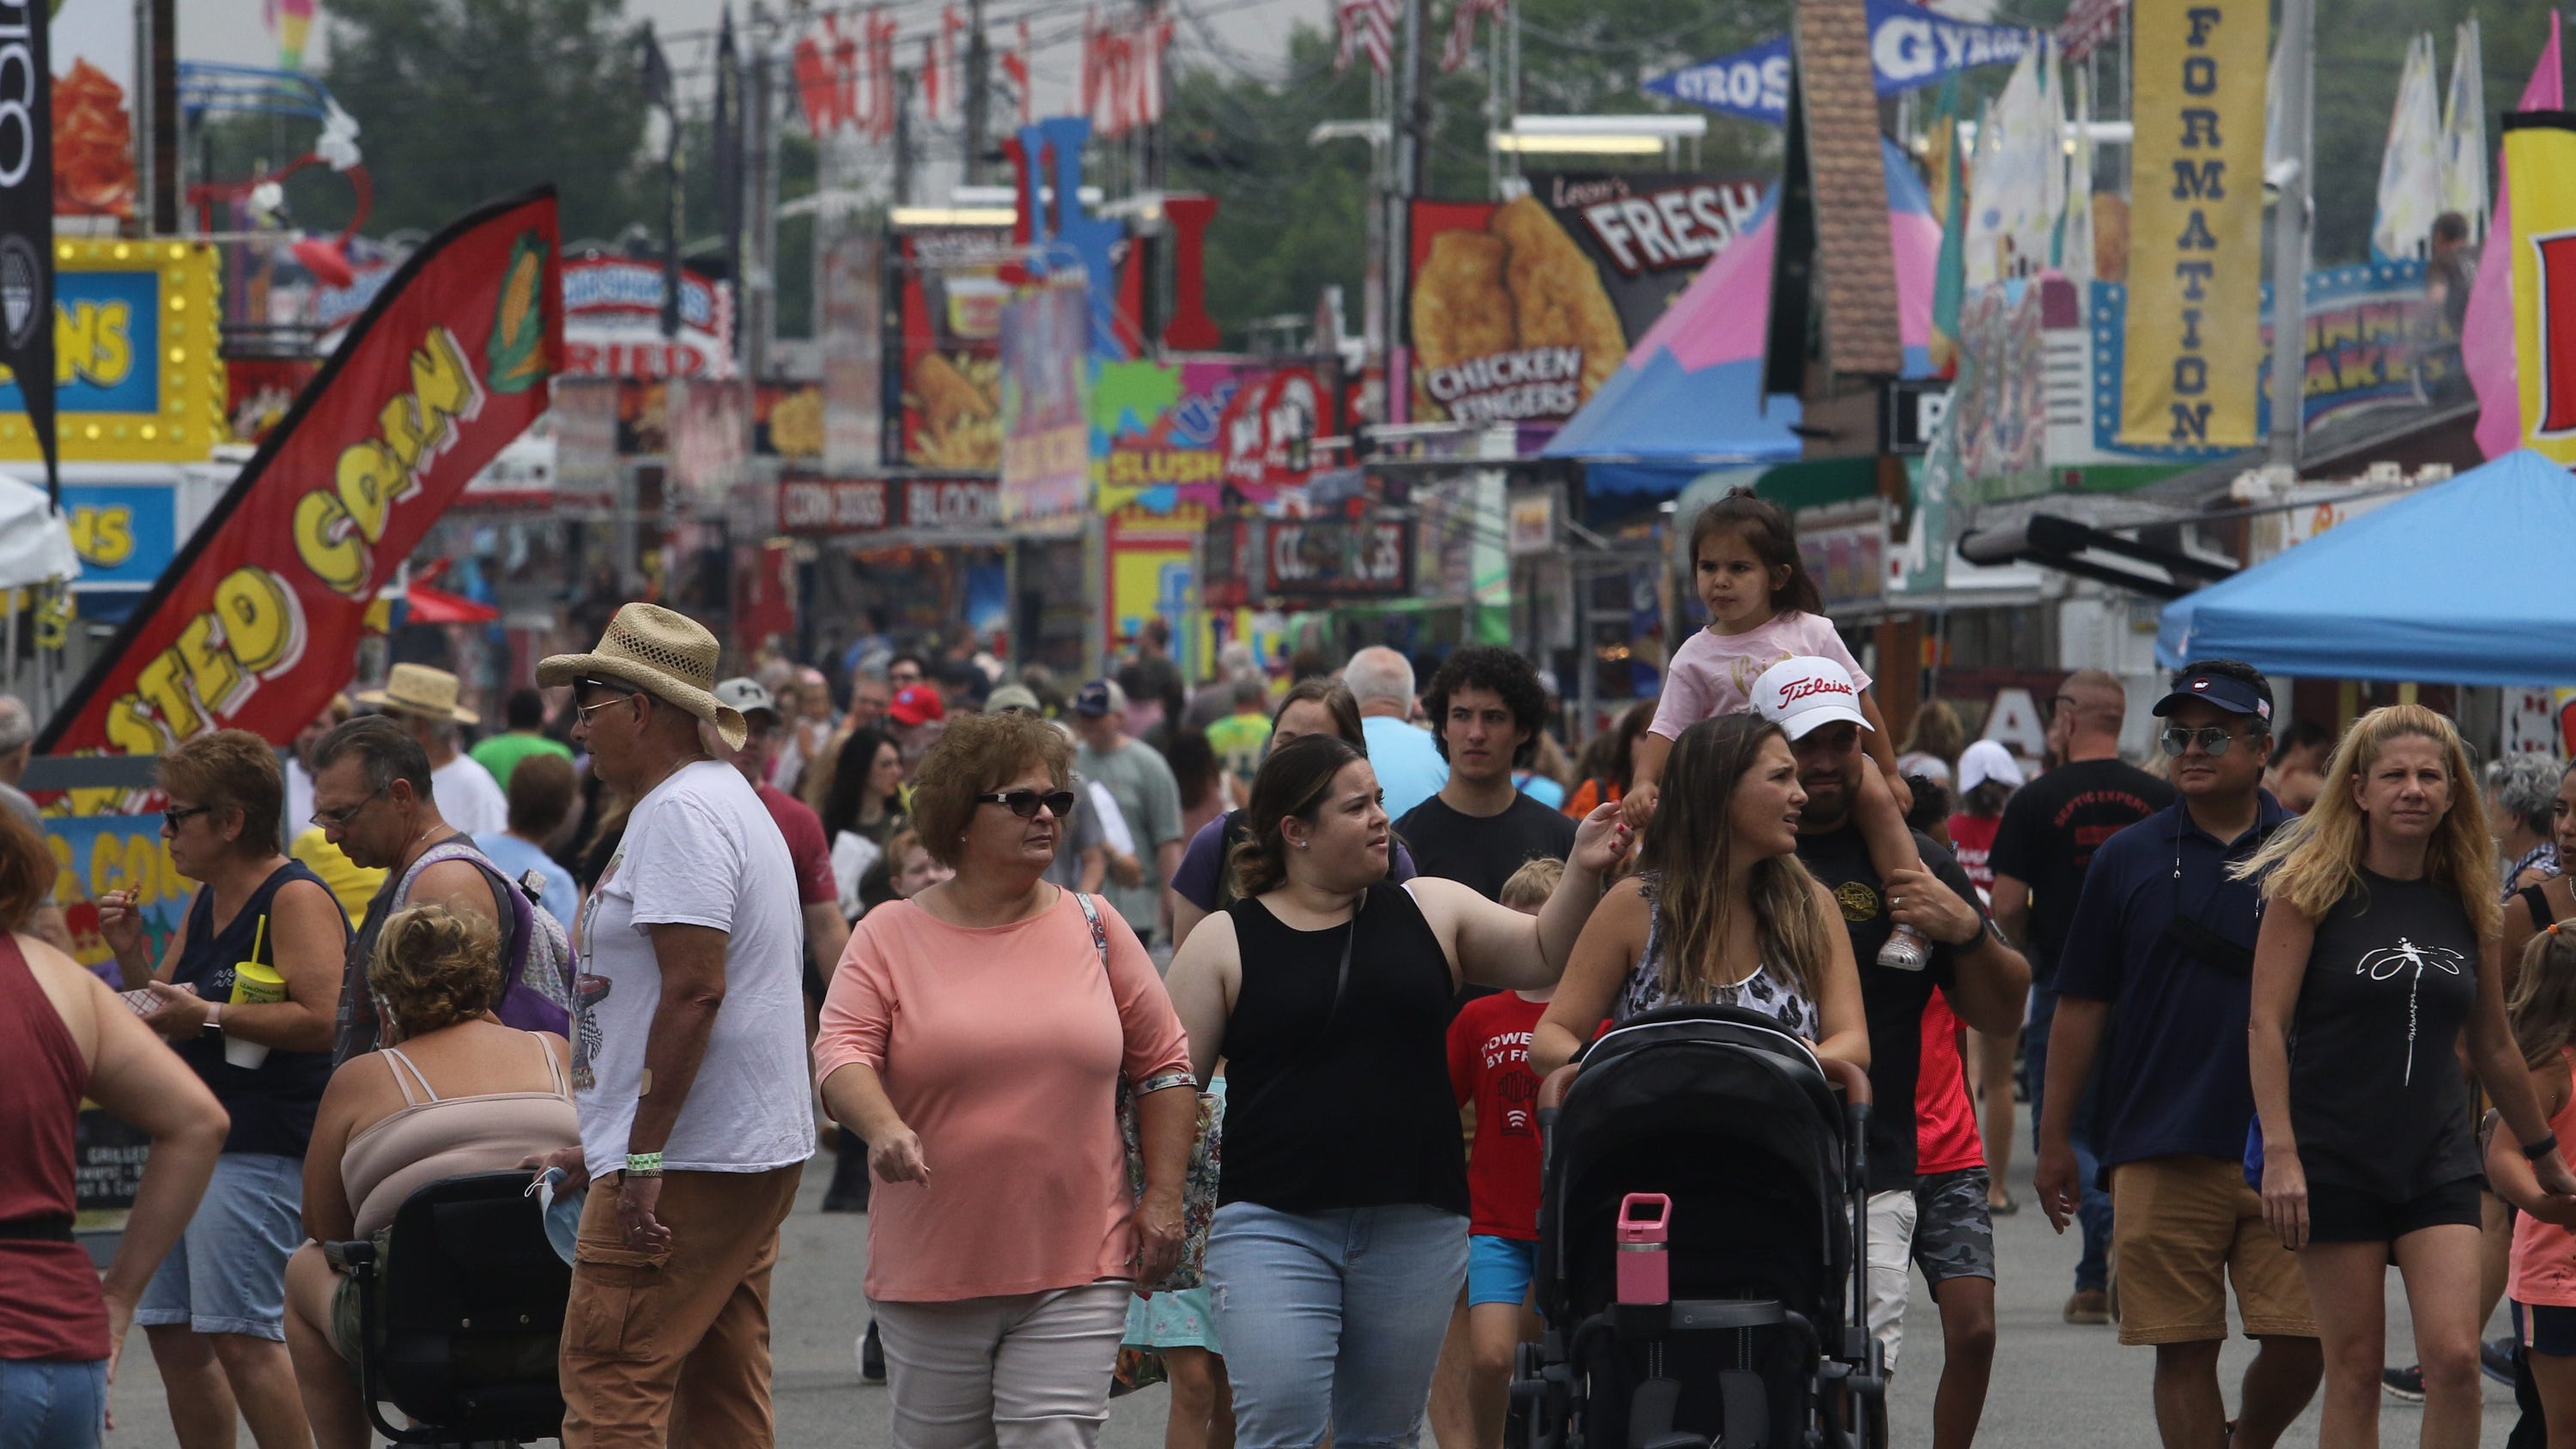 NJ State Fair returns in 2021, a year after COVID hiatus